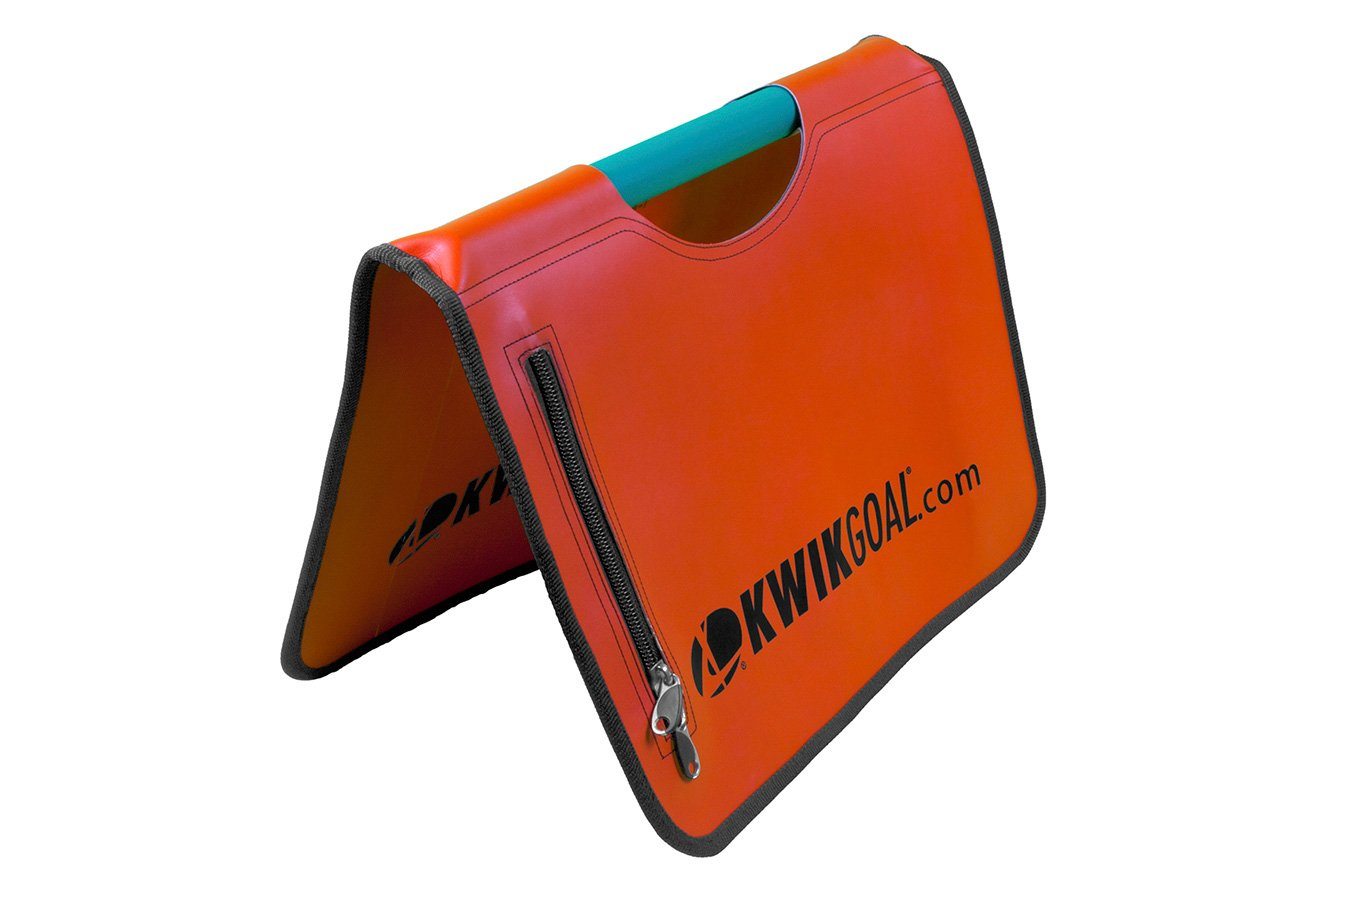 Kwikgoal Heavy Duty Anchor Bag | 10B7011 Goal accessories Kwikgoal 